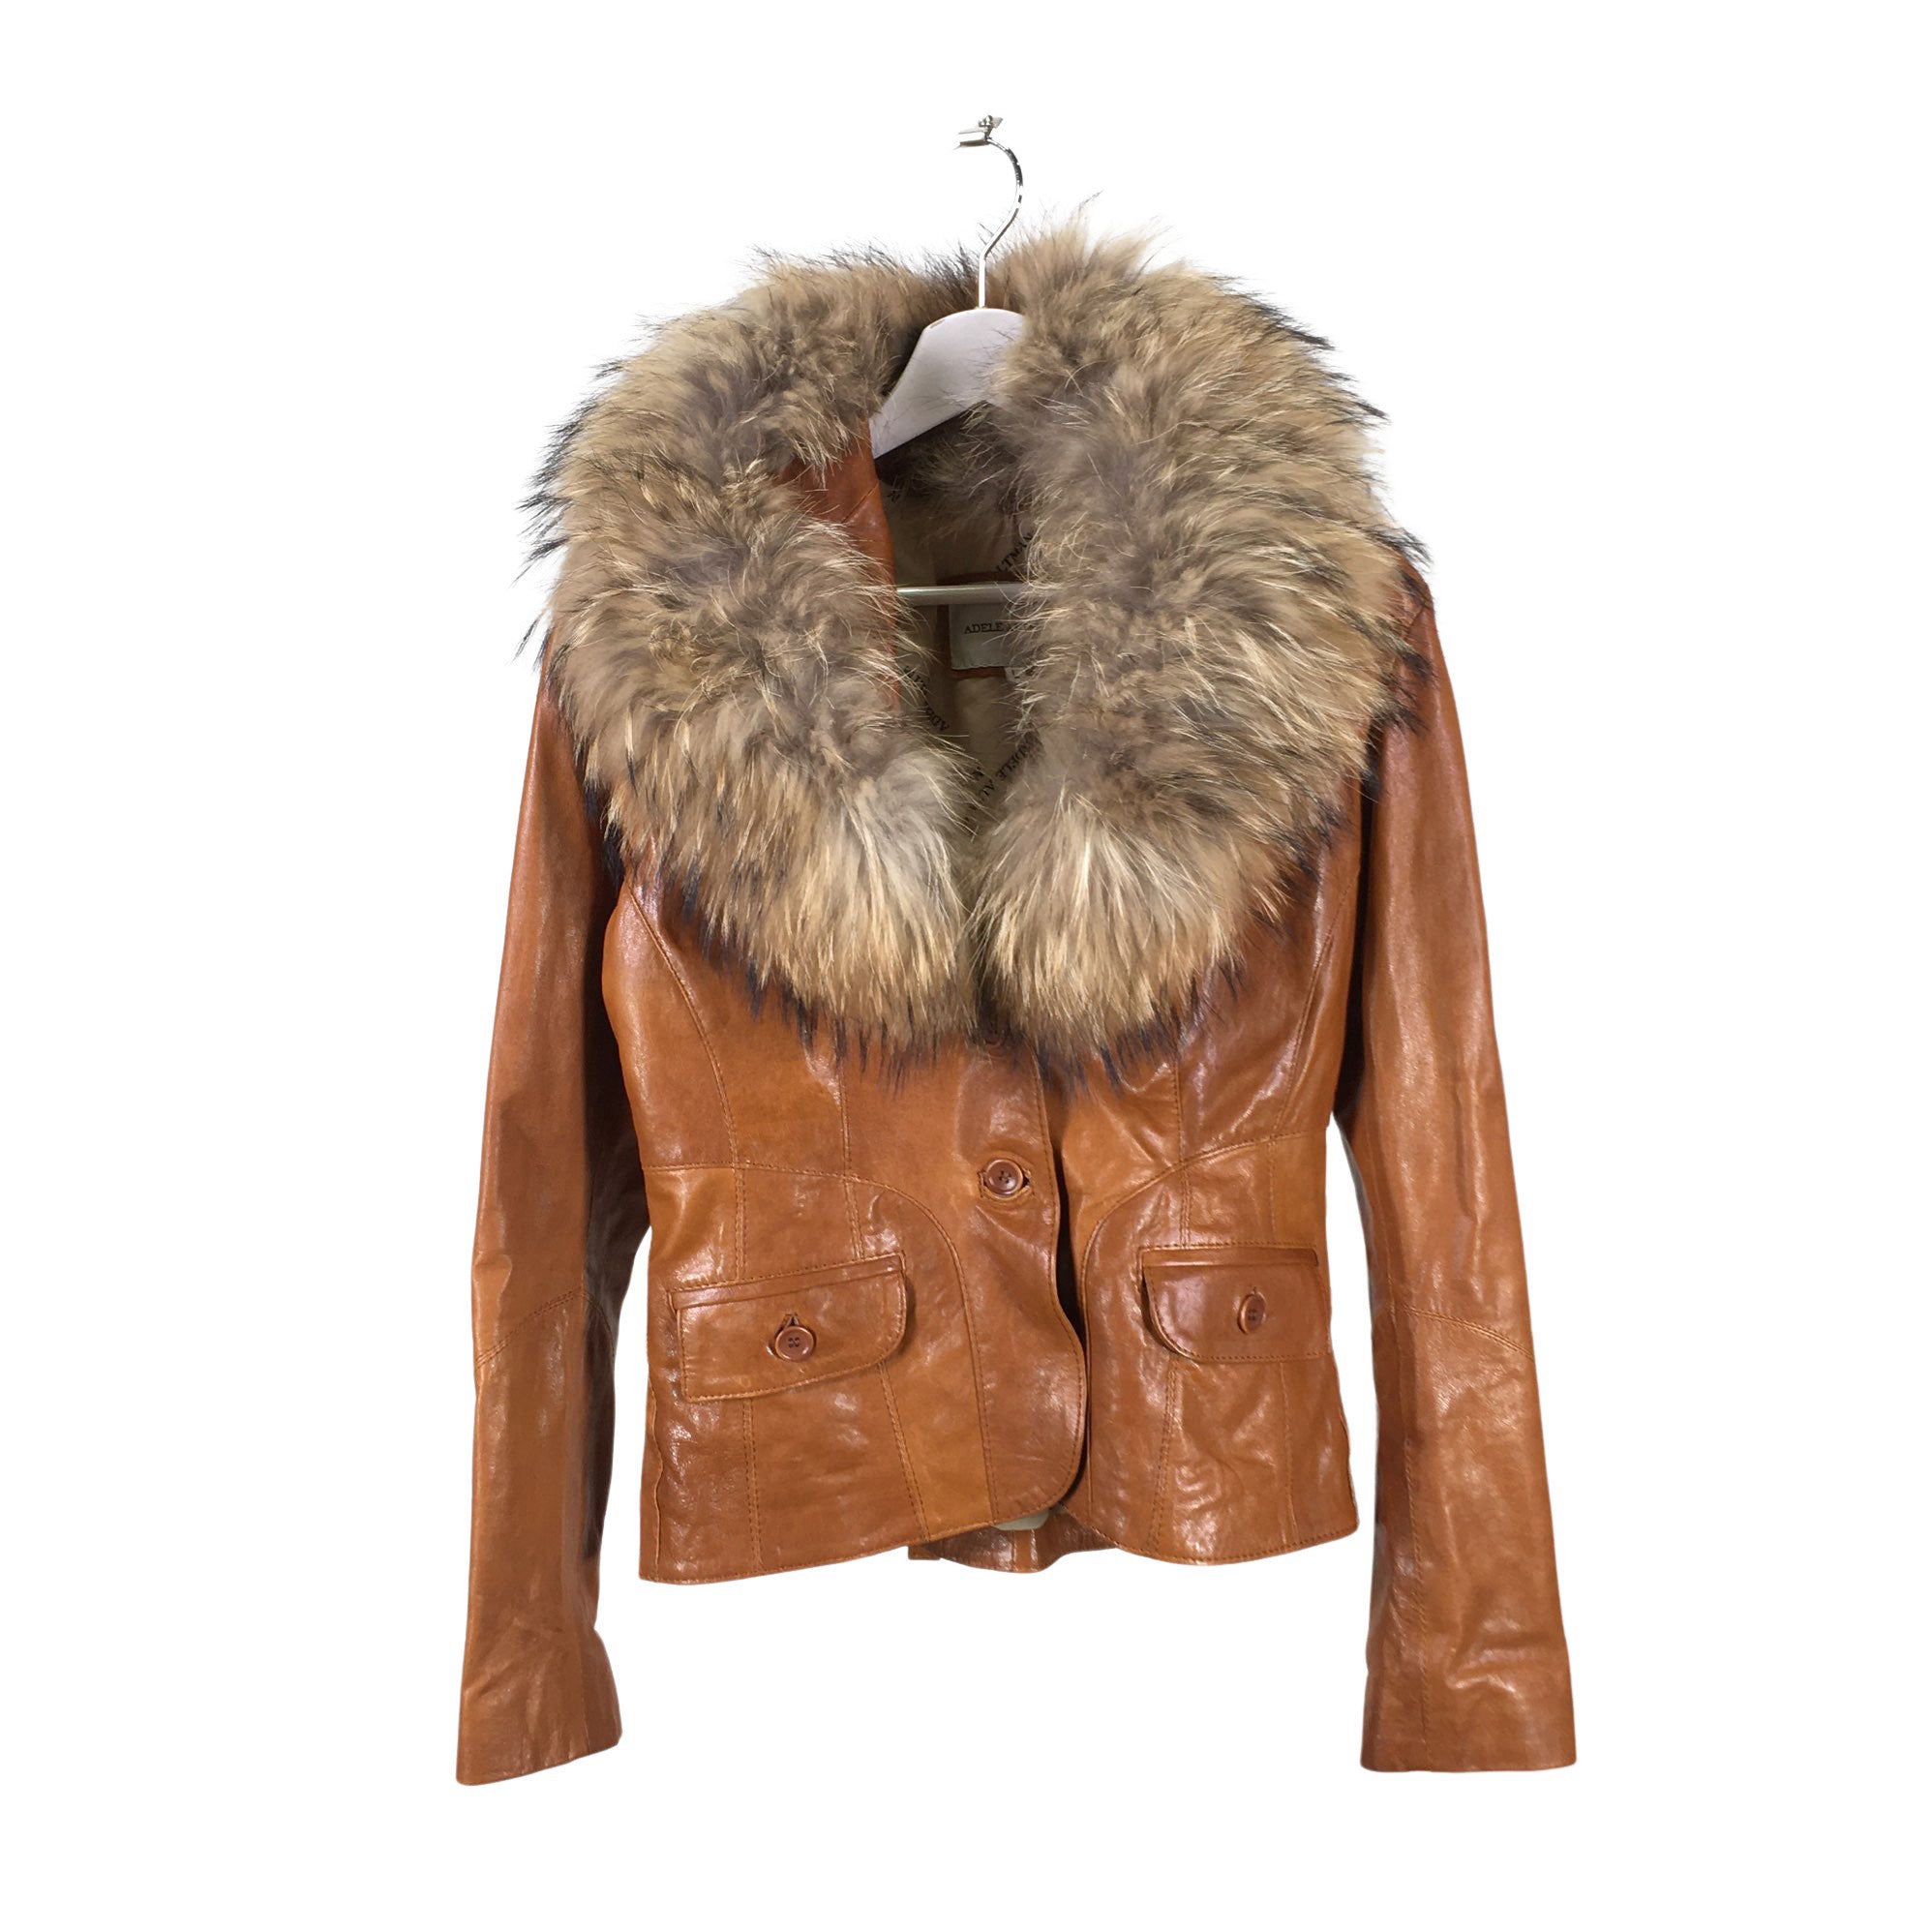 Women's Adele Altman Leather jacket, size 36 (Brown)